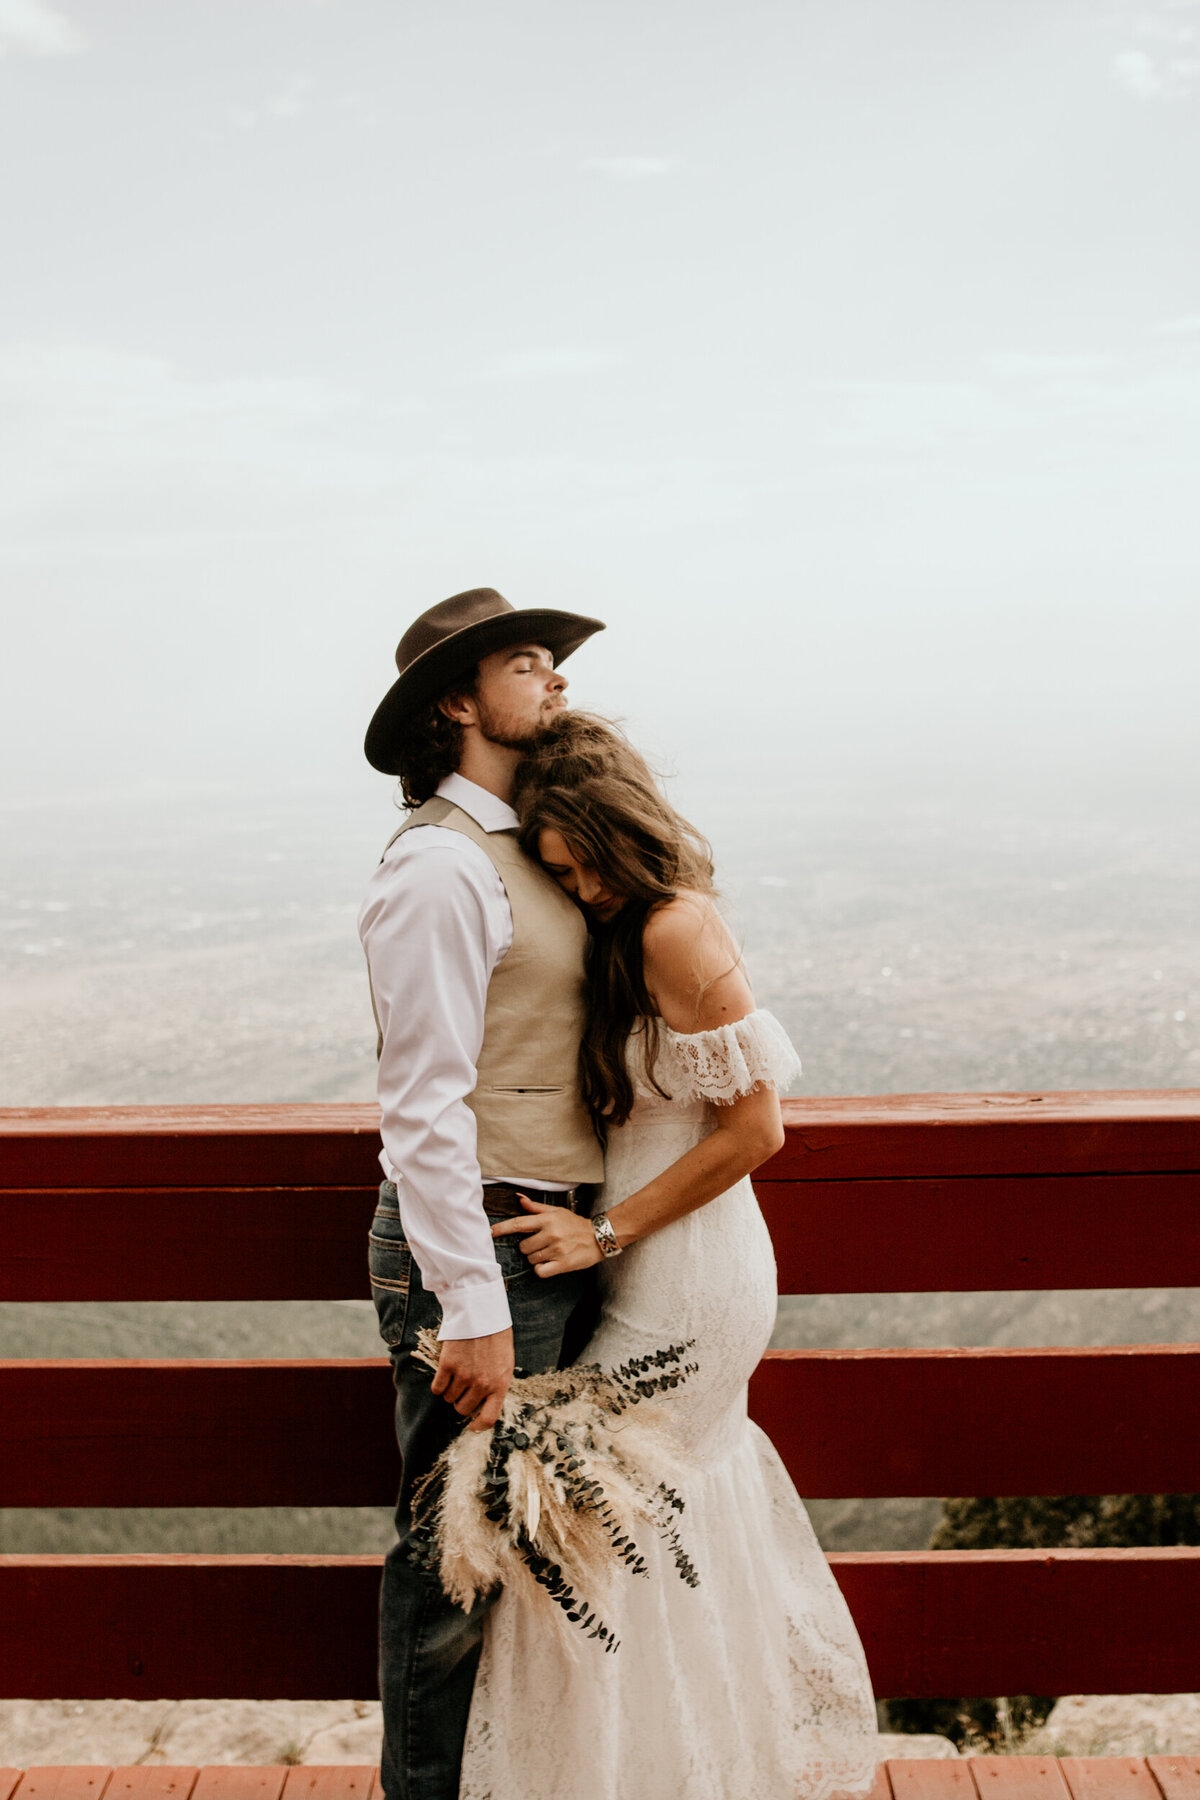 Bride and groom hugging intimately at the Sandia Peak Tram